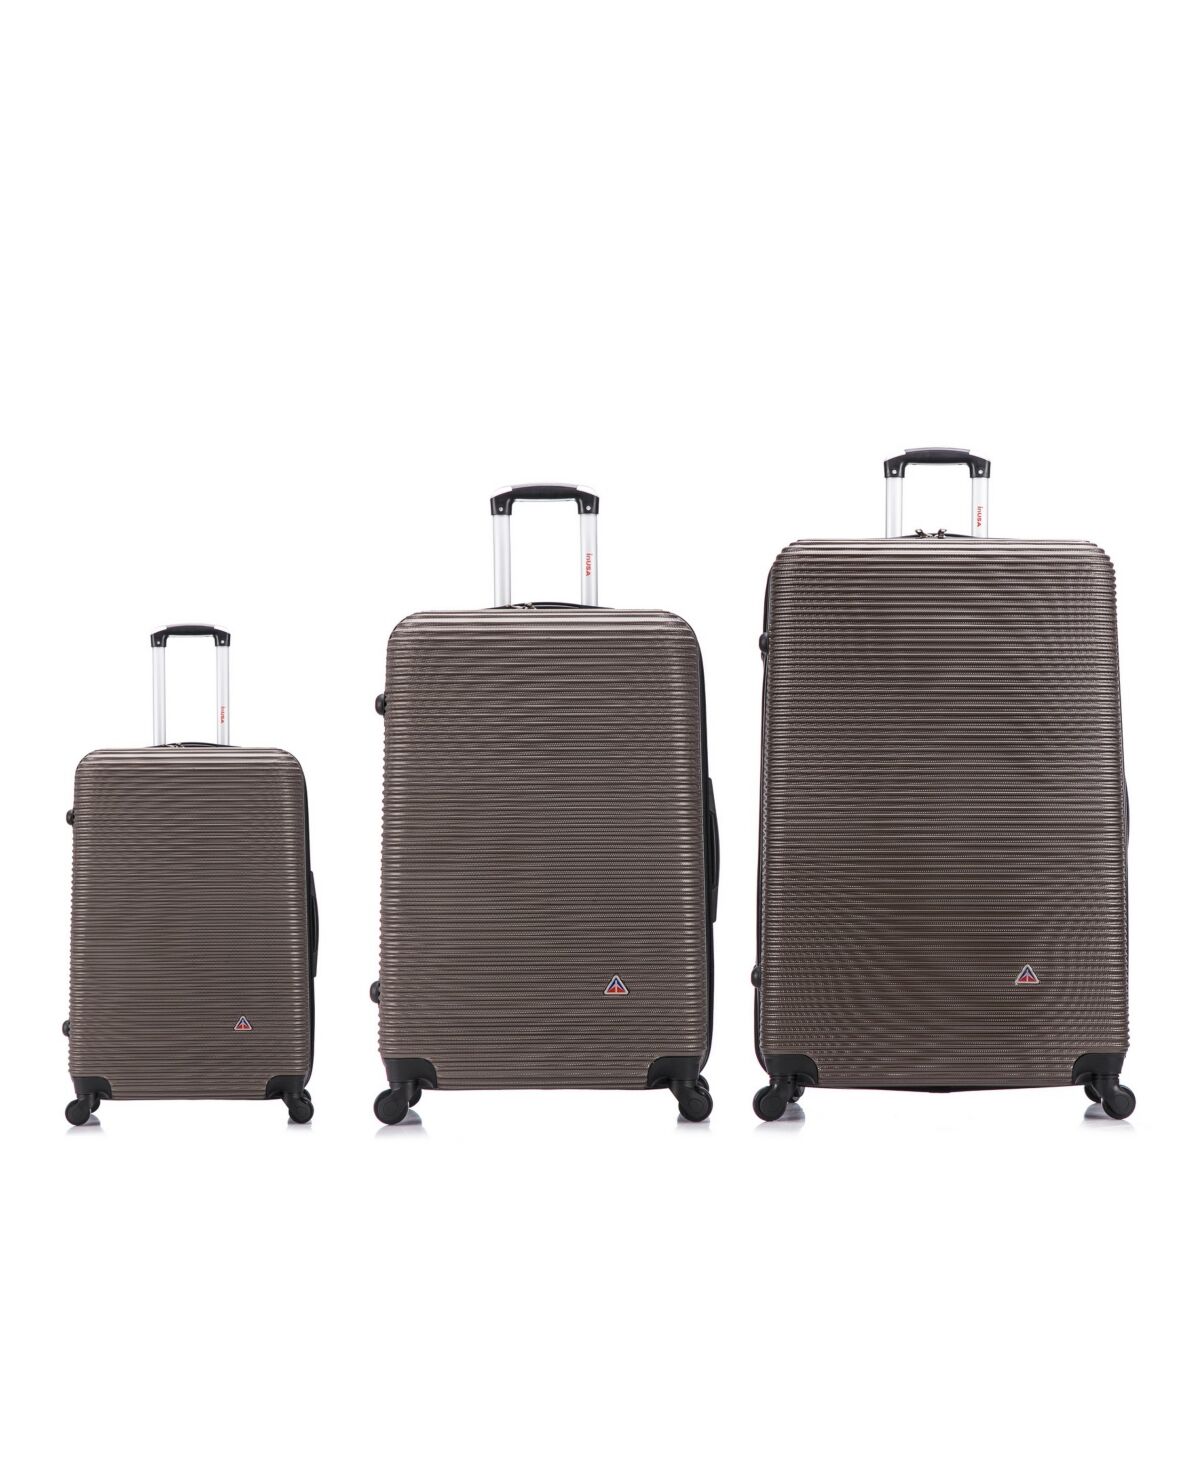 InUSA Royal 3-Pc. Lightweight Hardside Spinner Luggage Set - Brown